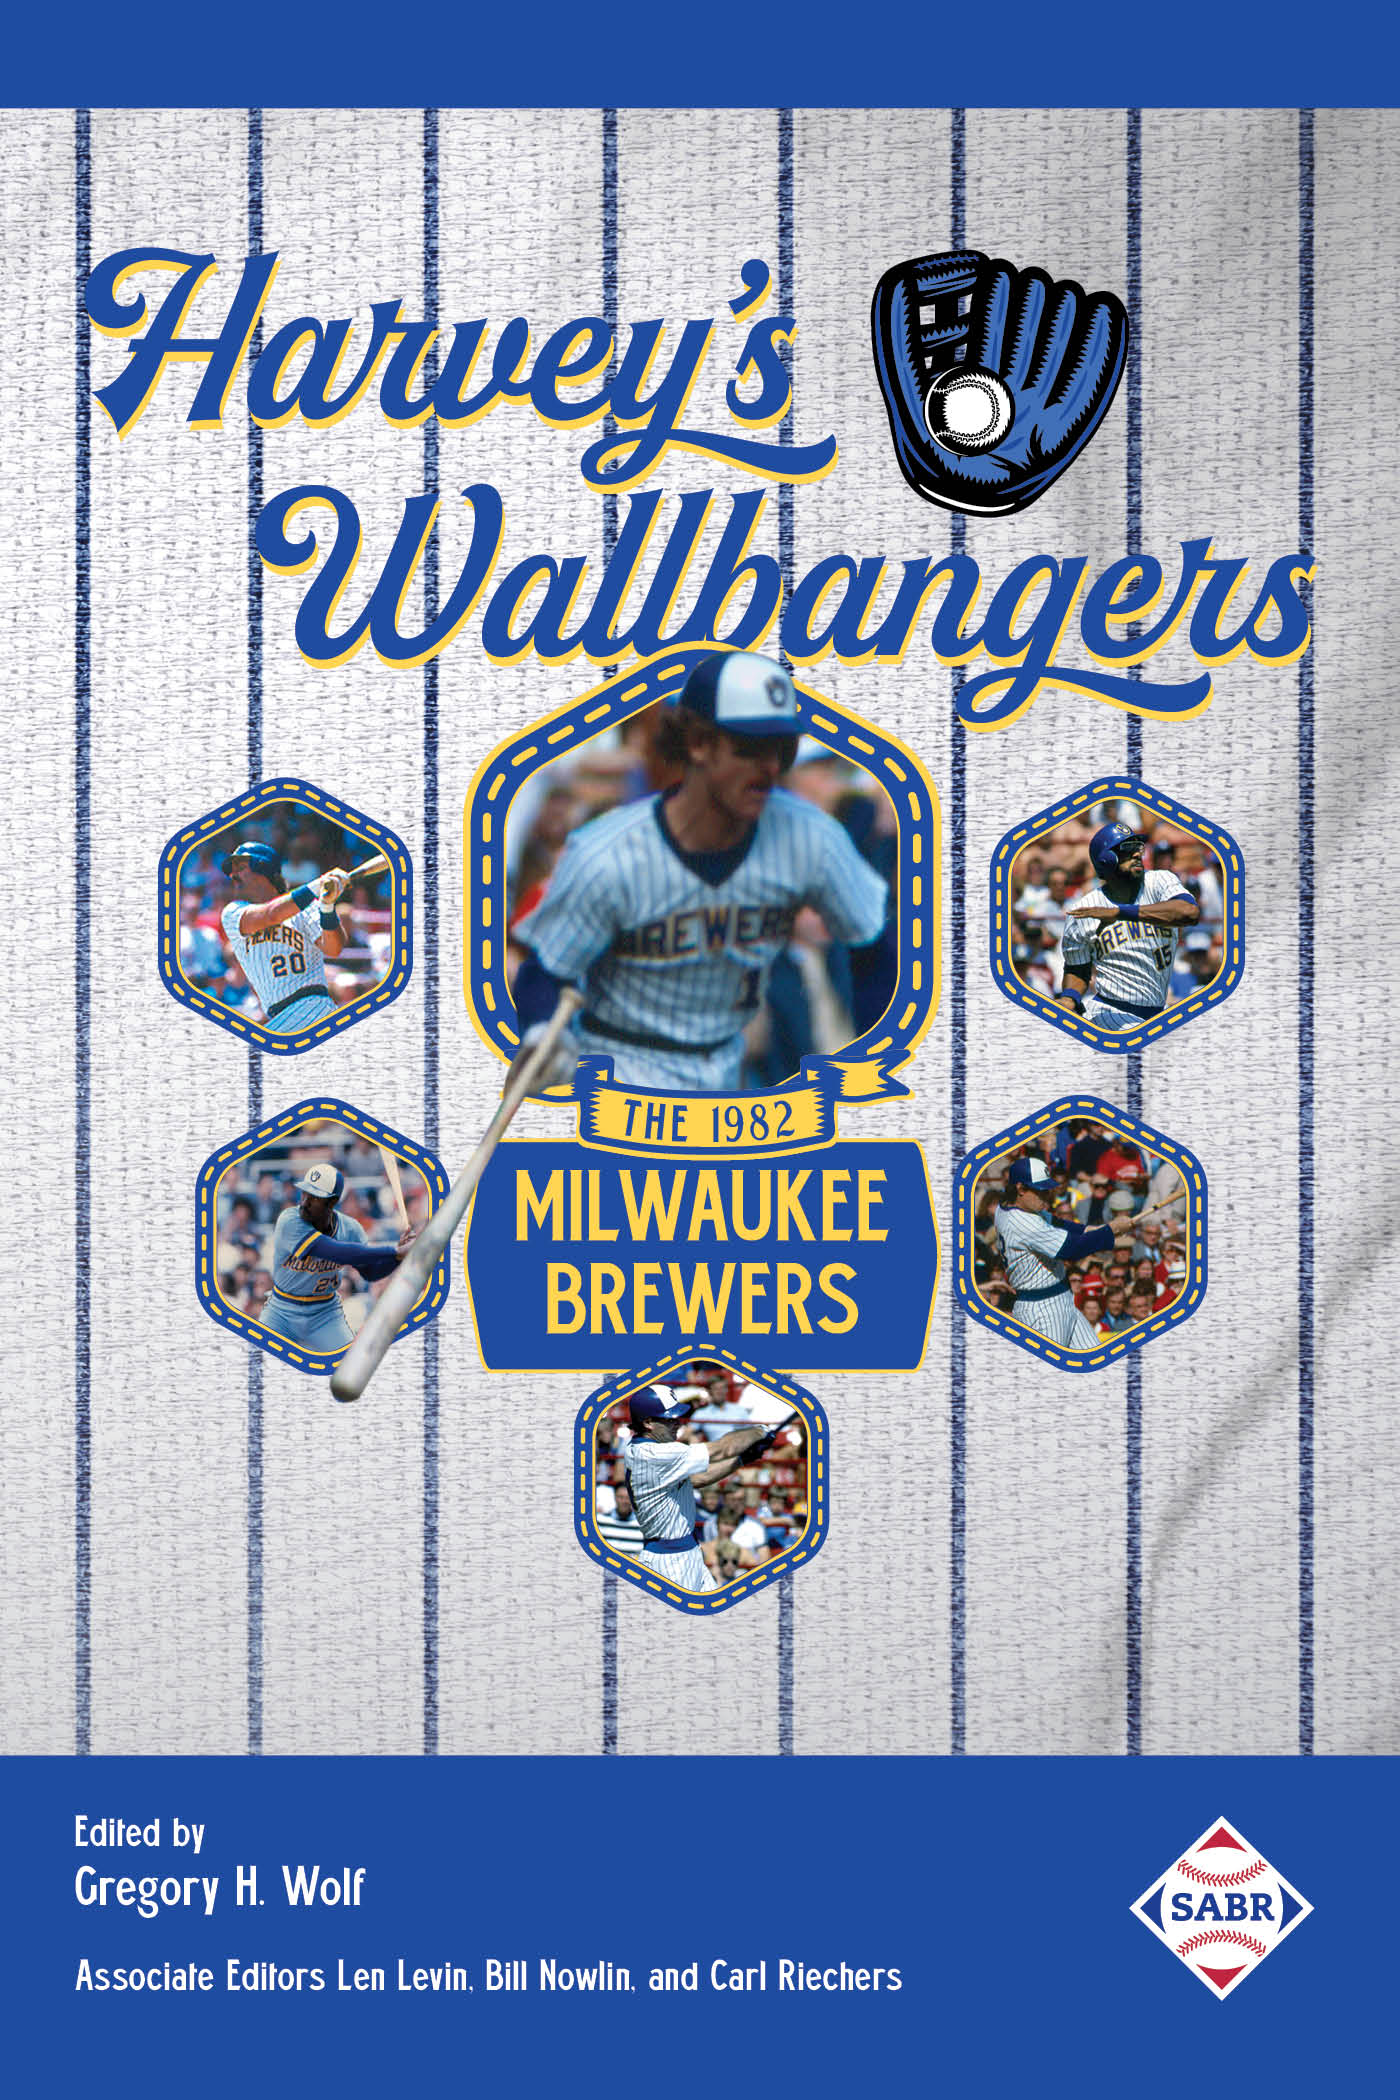 SABR Digital Library: Harvey's Wallbangers: The 1982 Milwaukee